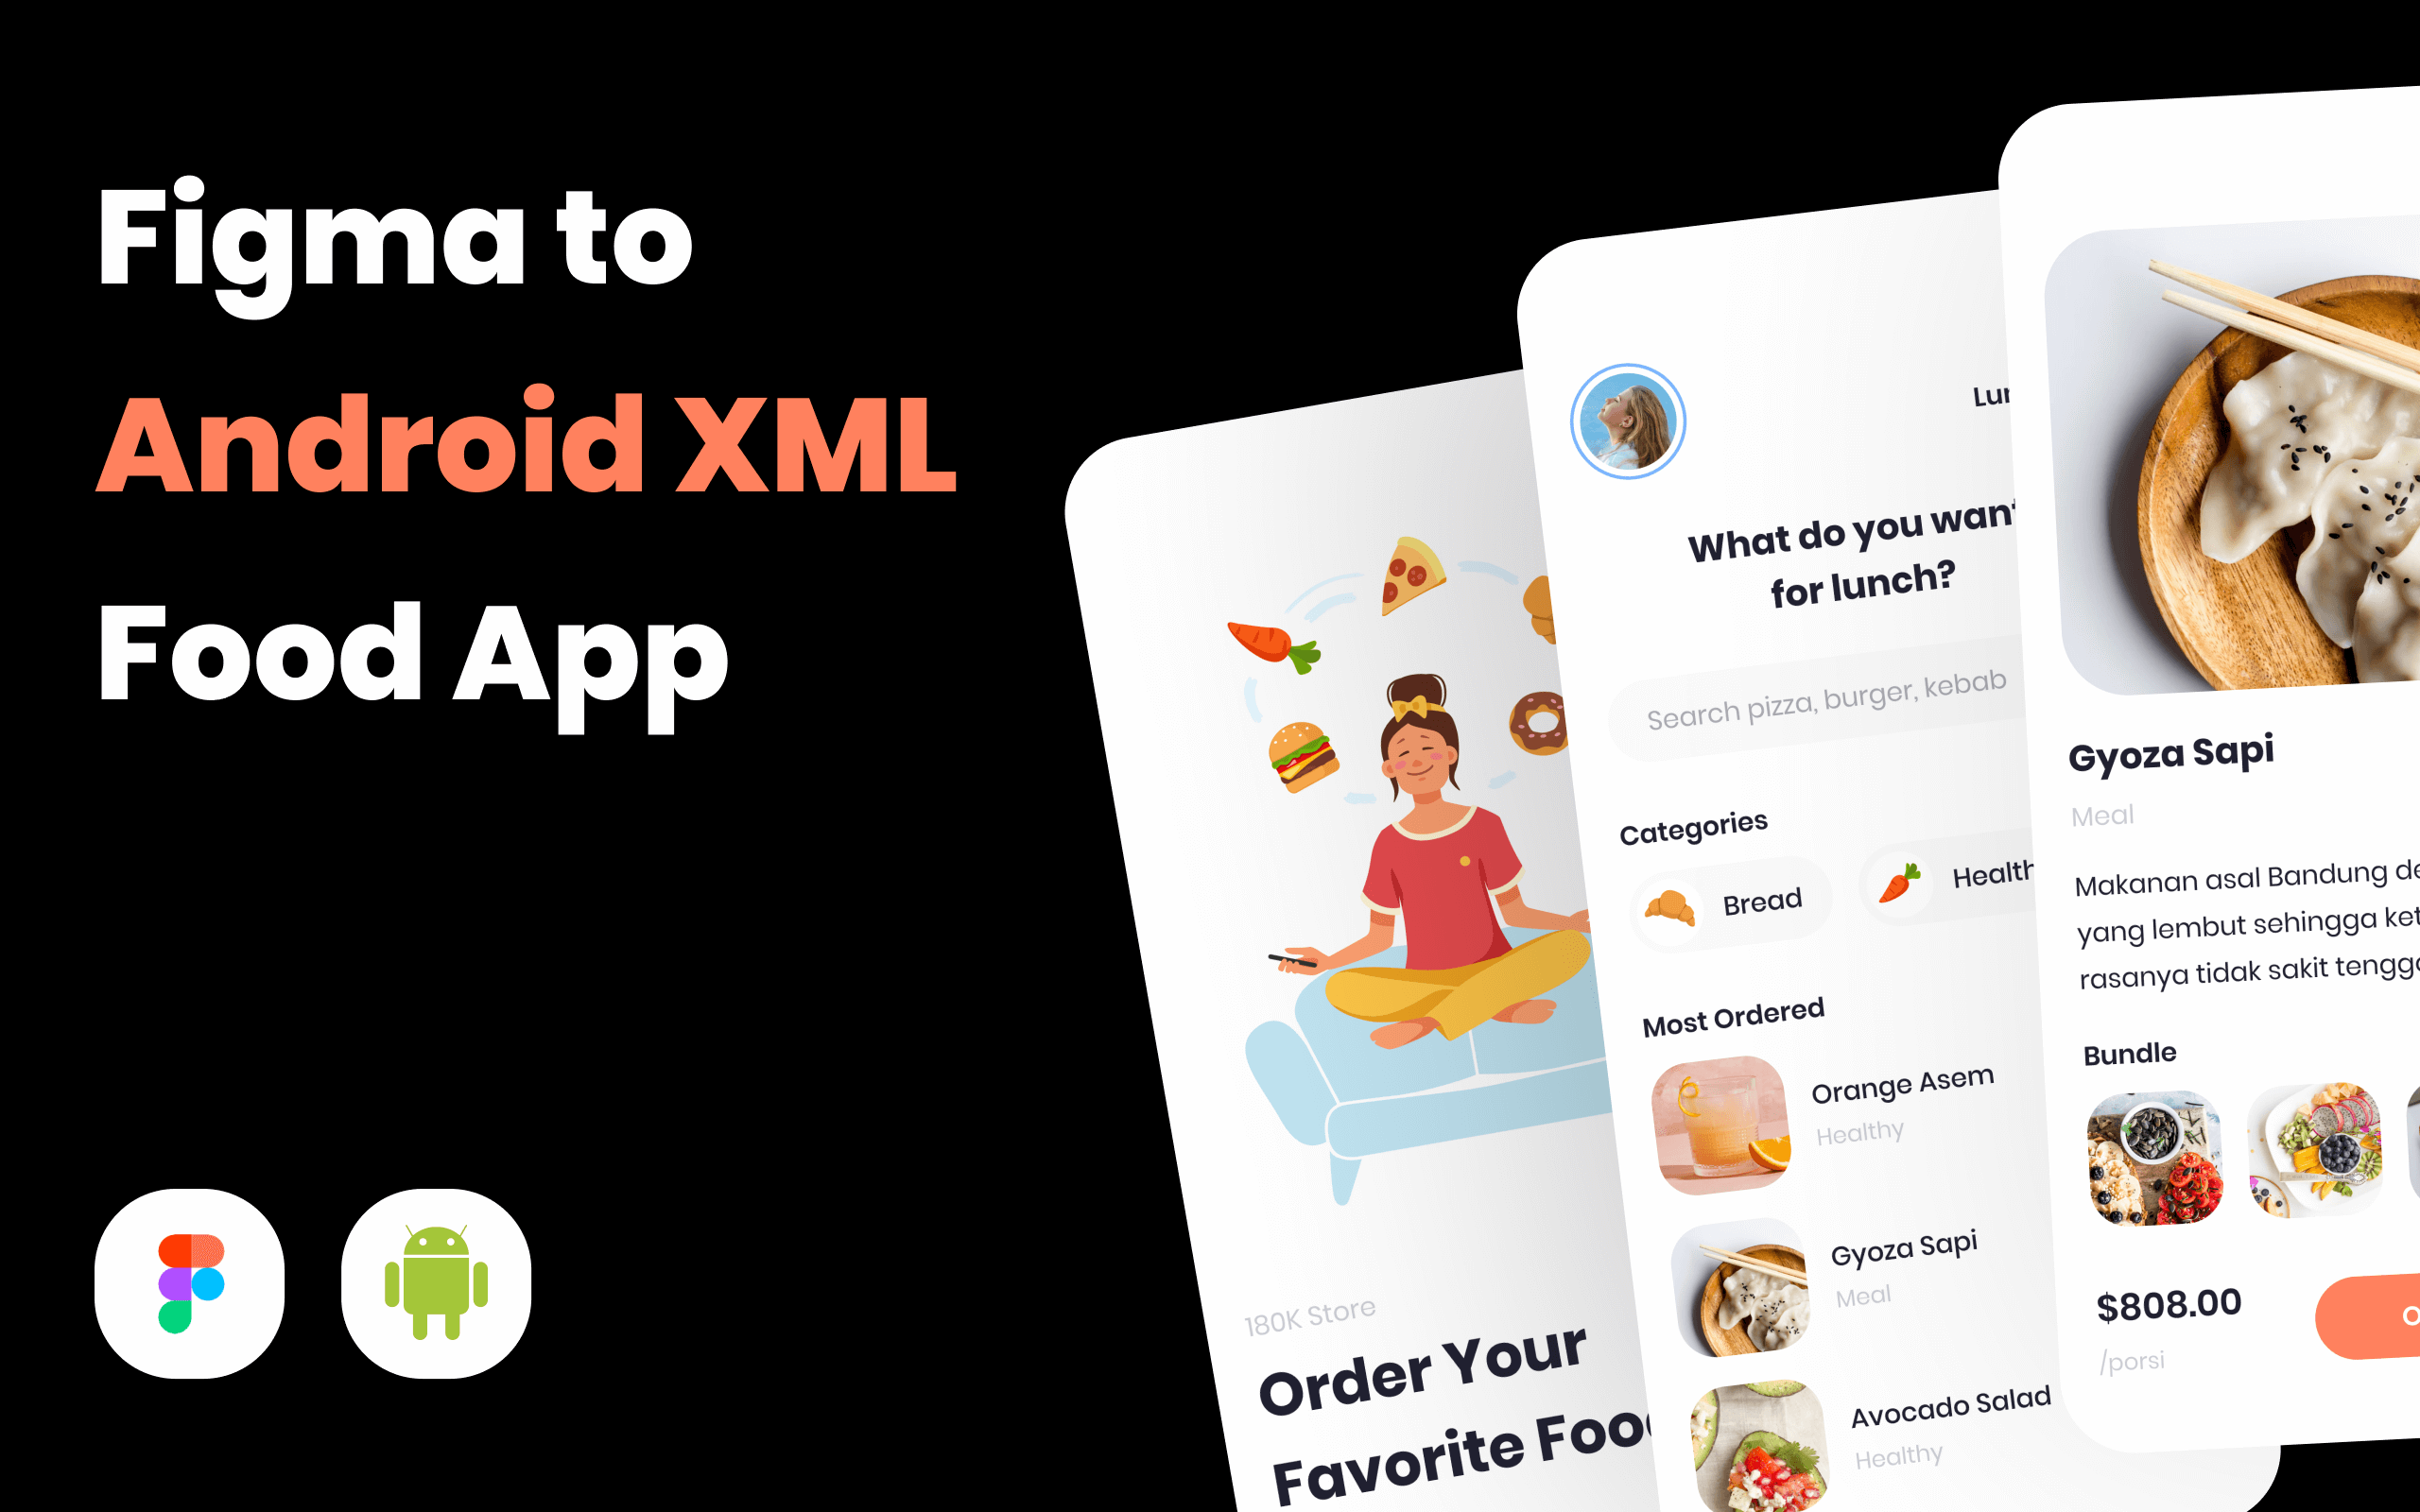 Kelas Android App Development: Figma to Android XML Food App di BuildWithAngga